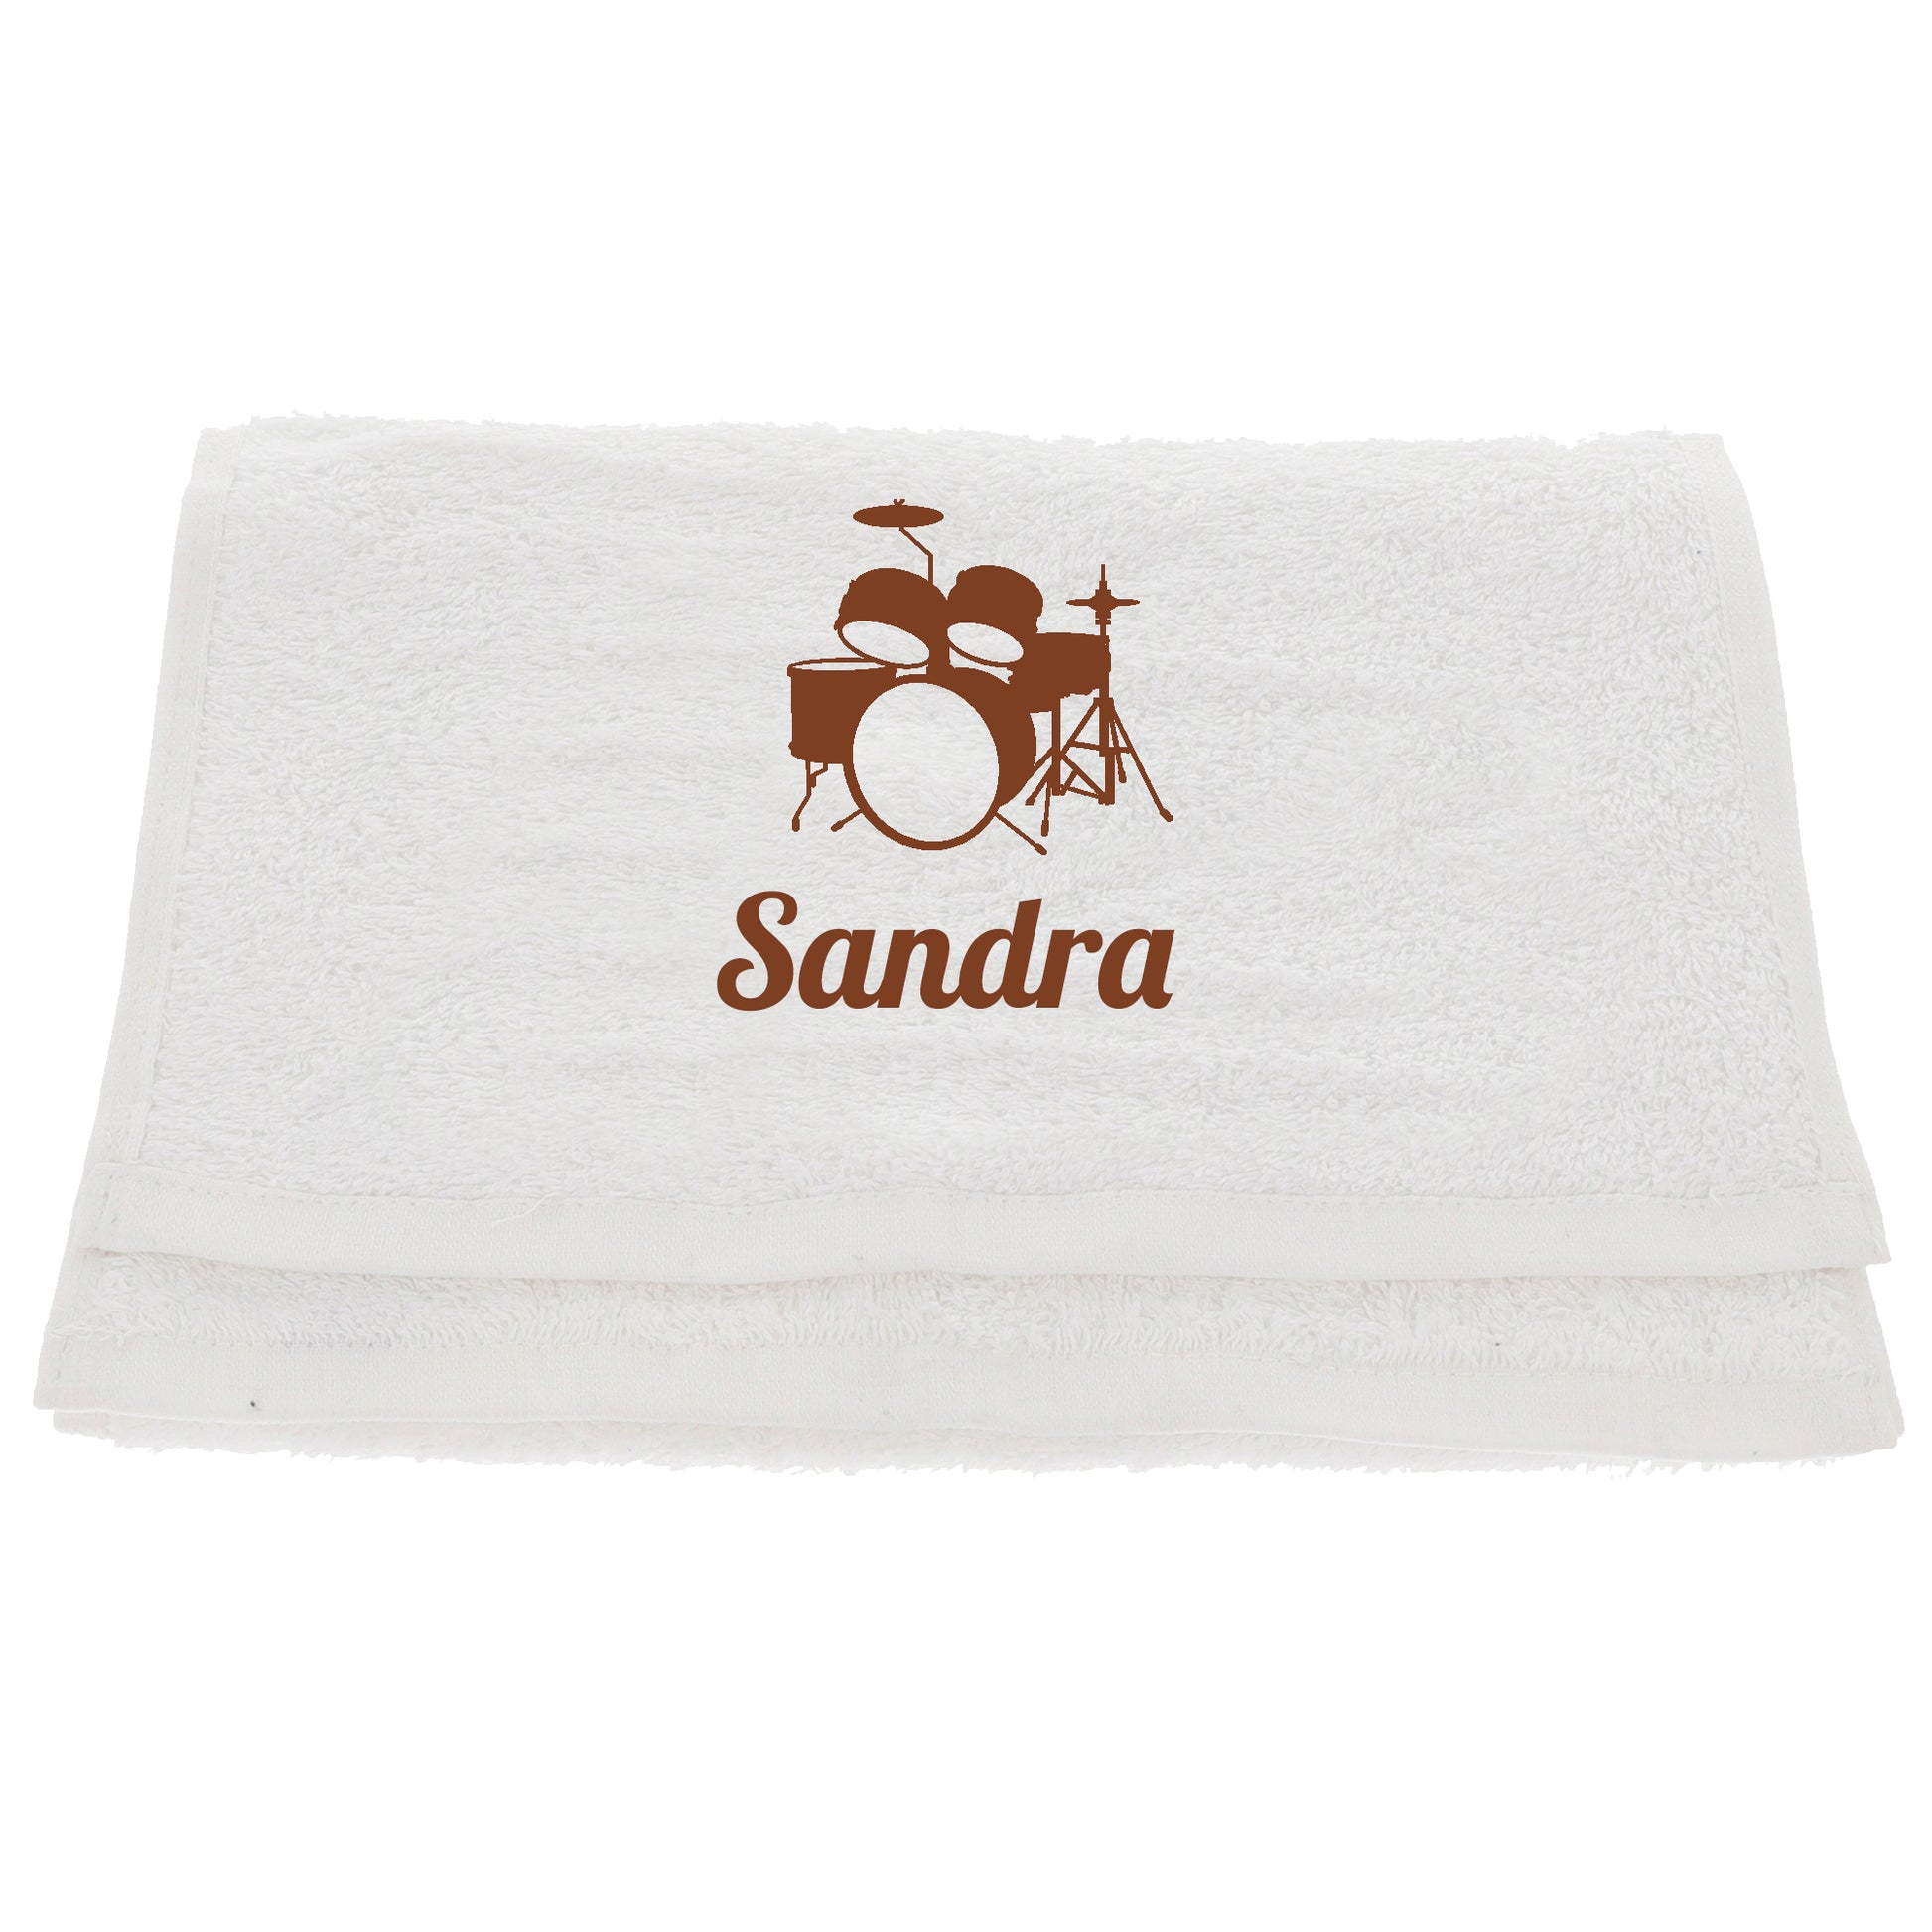 Personalised Embroidered Drummer Towel  - Always Looking Good - White  